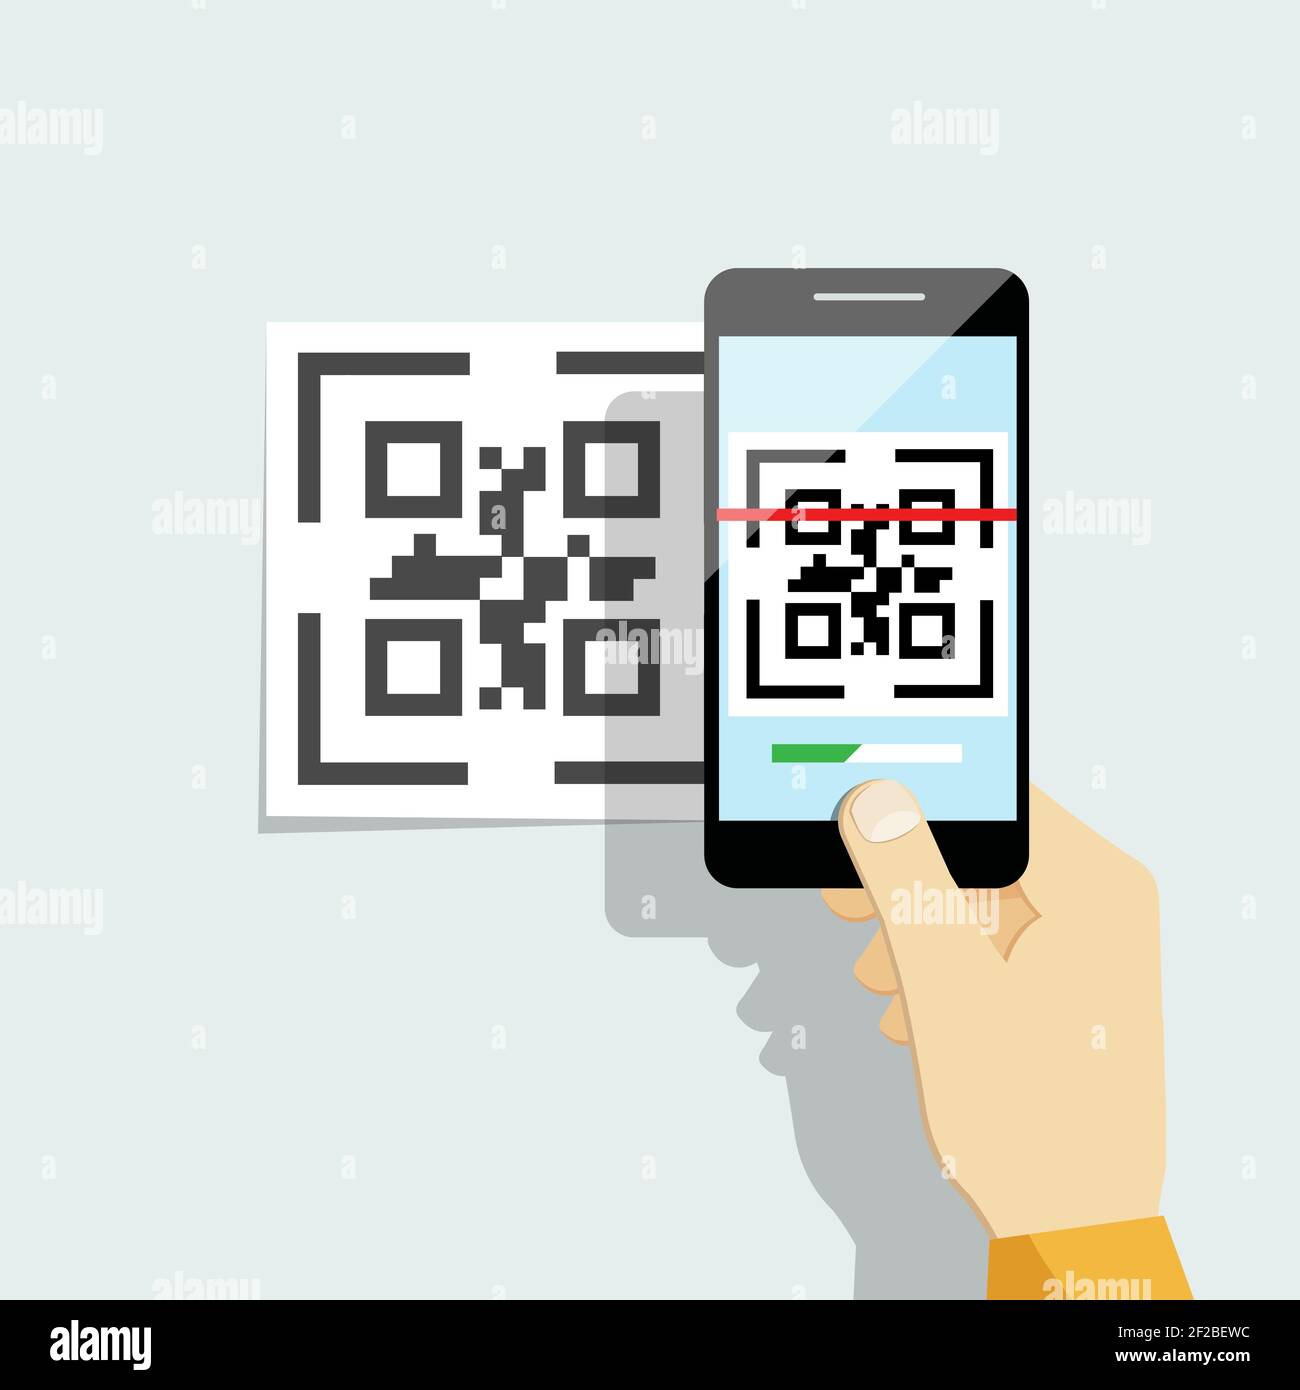 Capture QR code on mobile phone. Digital technology, information barcode, symbol electronic scan. Vector illustration Stock Vector